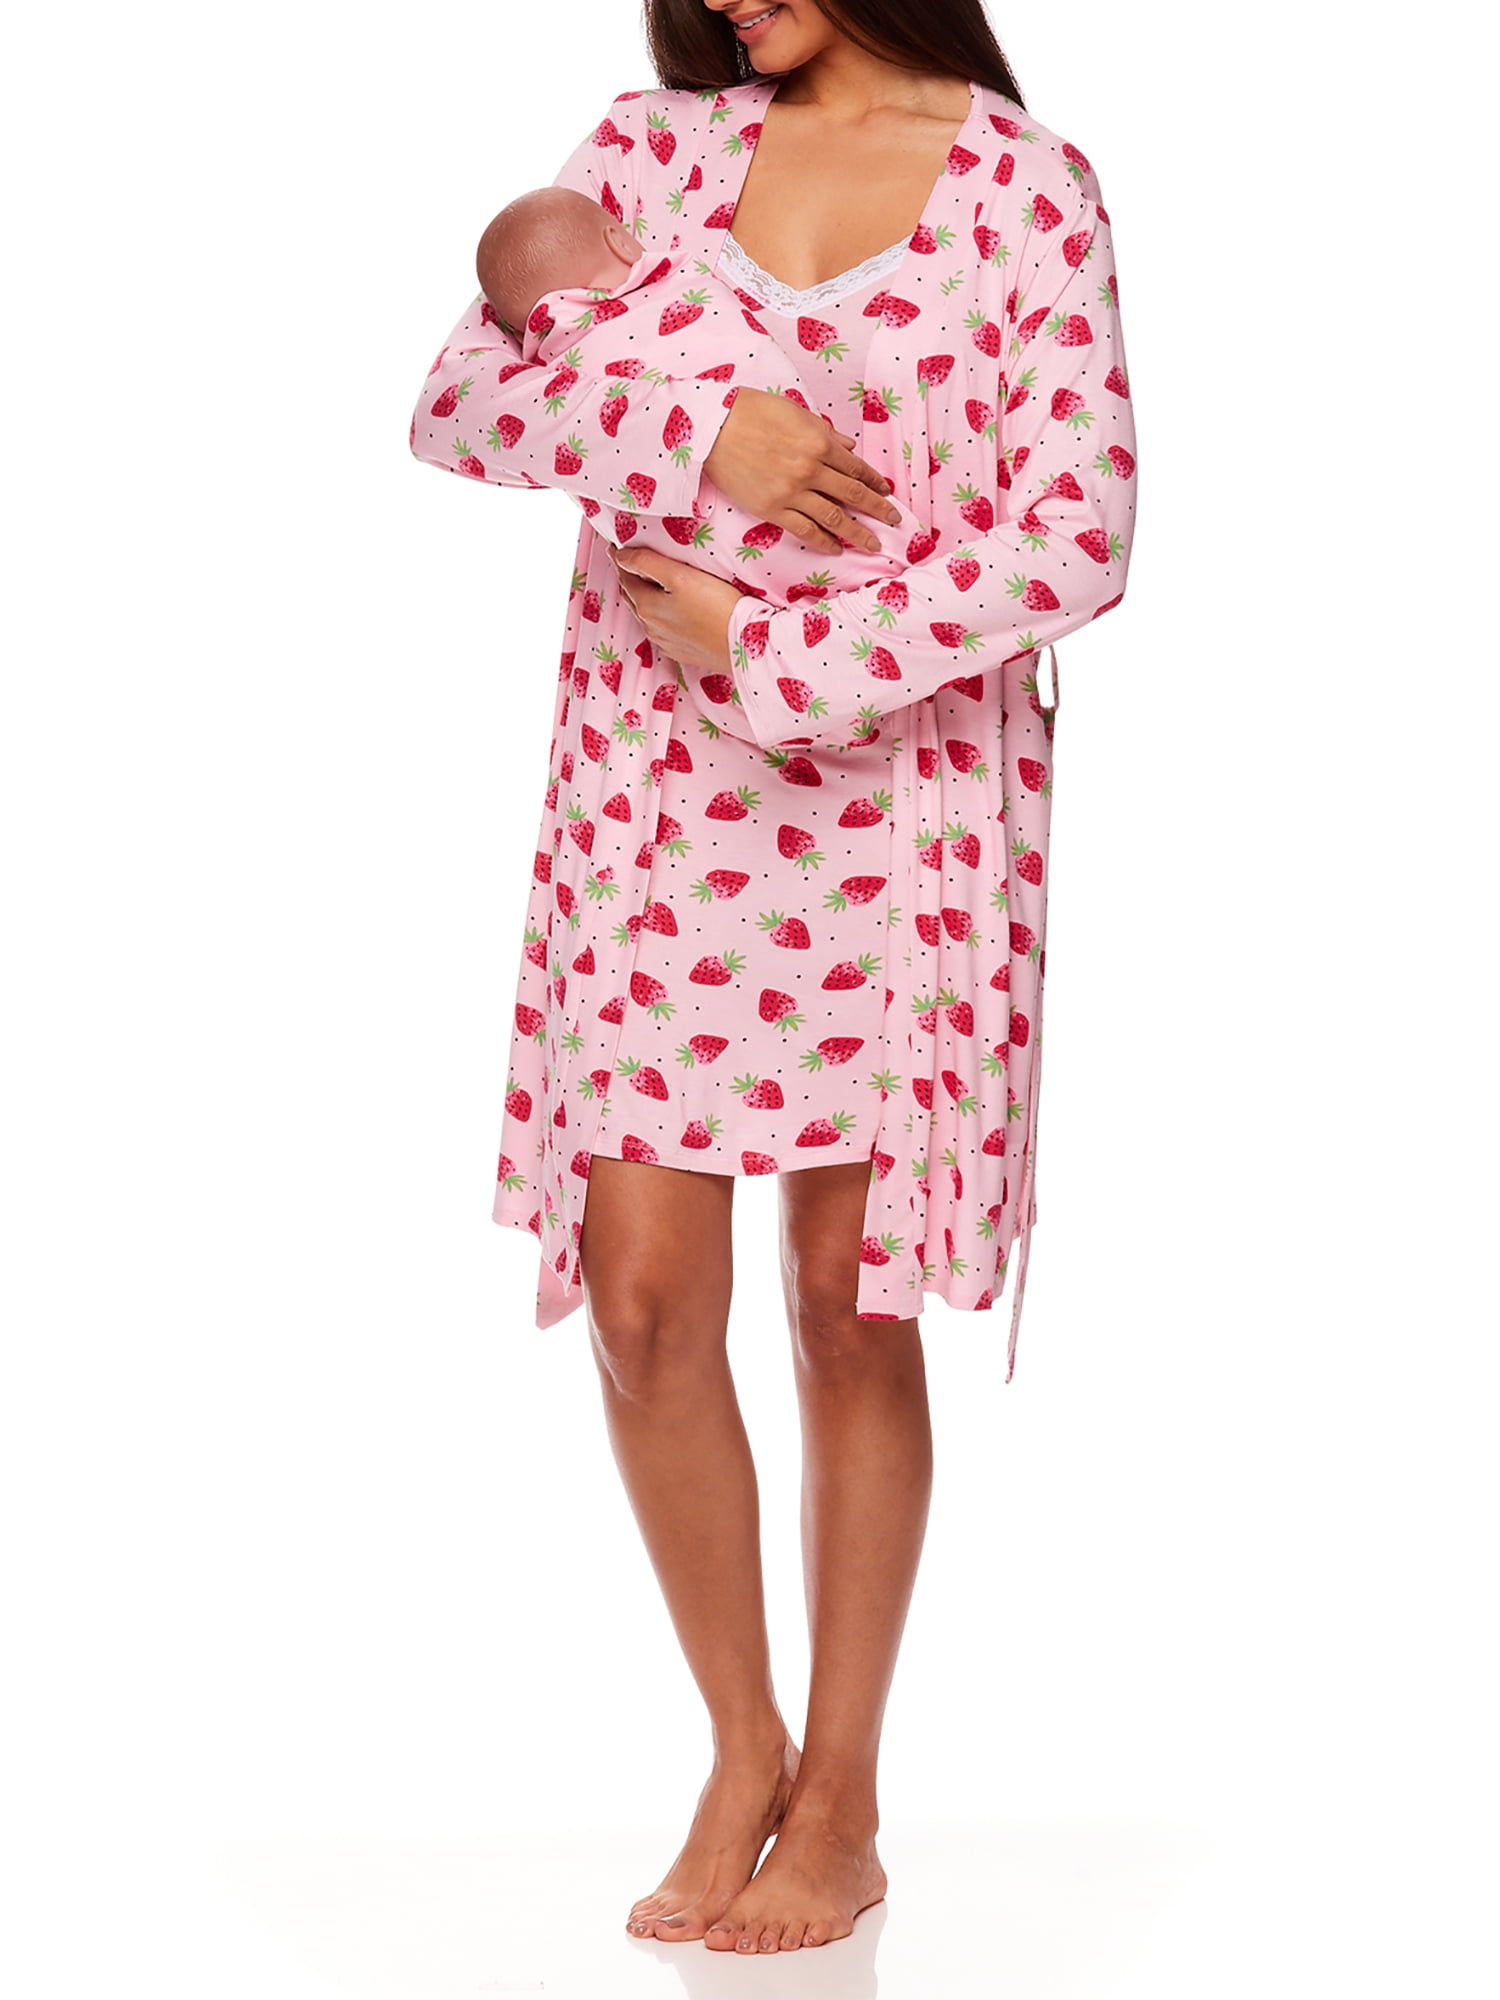 Lamaze Intimates Womens Nursing Nightgown Long Sleeve Breastfeeding Maternity Pajama Dress Sleep Shirt